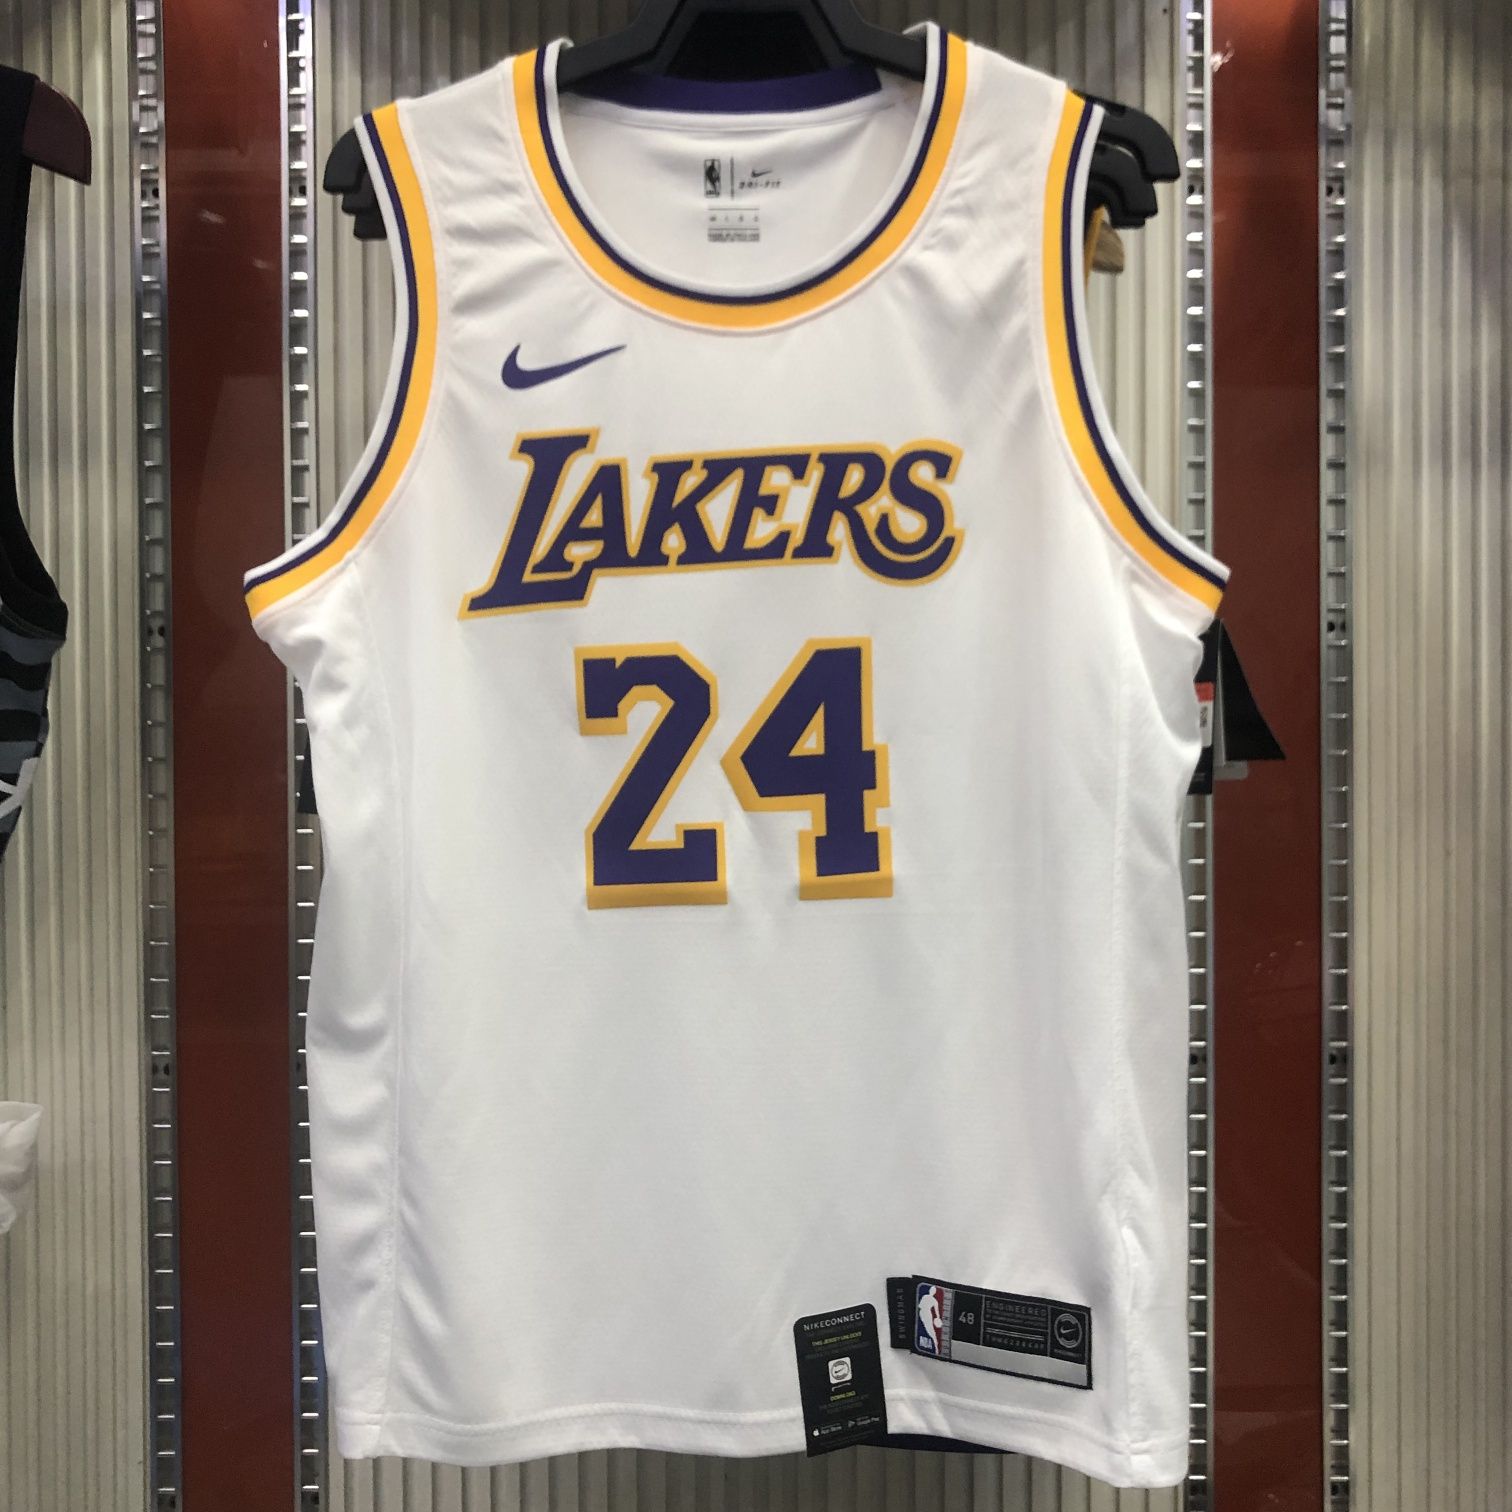 Camisola de basket dos Lakers